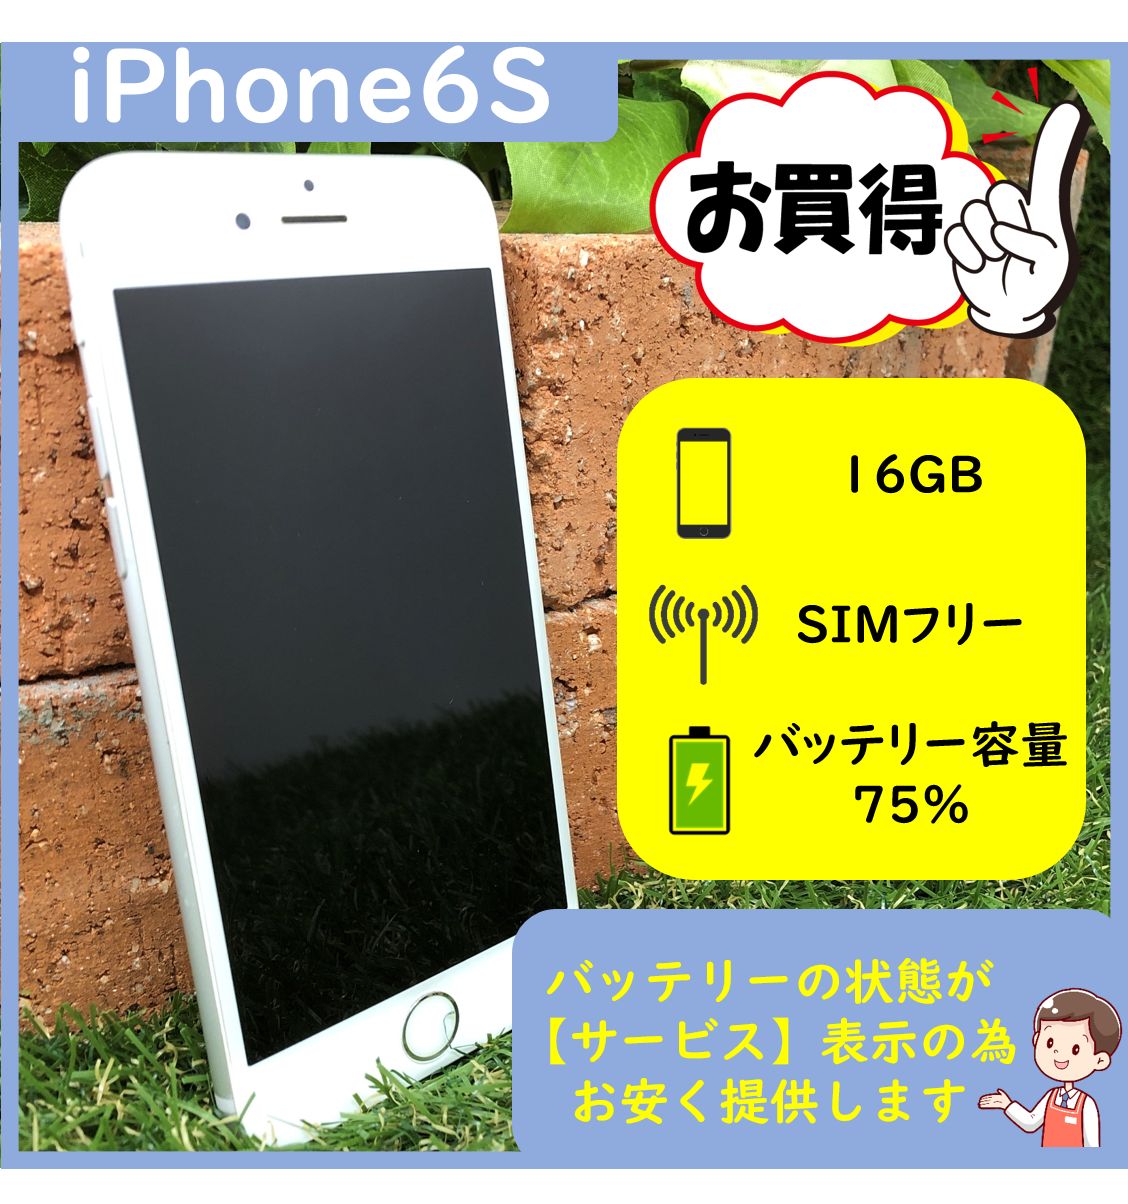 iPhone6s 本体 - スマートフォン本体